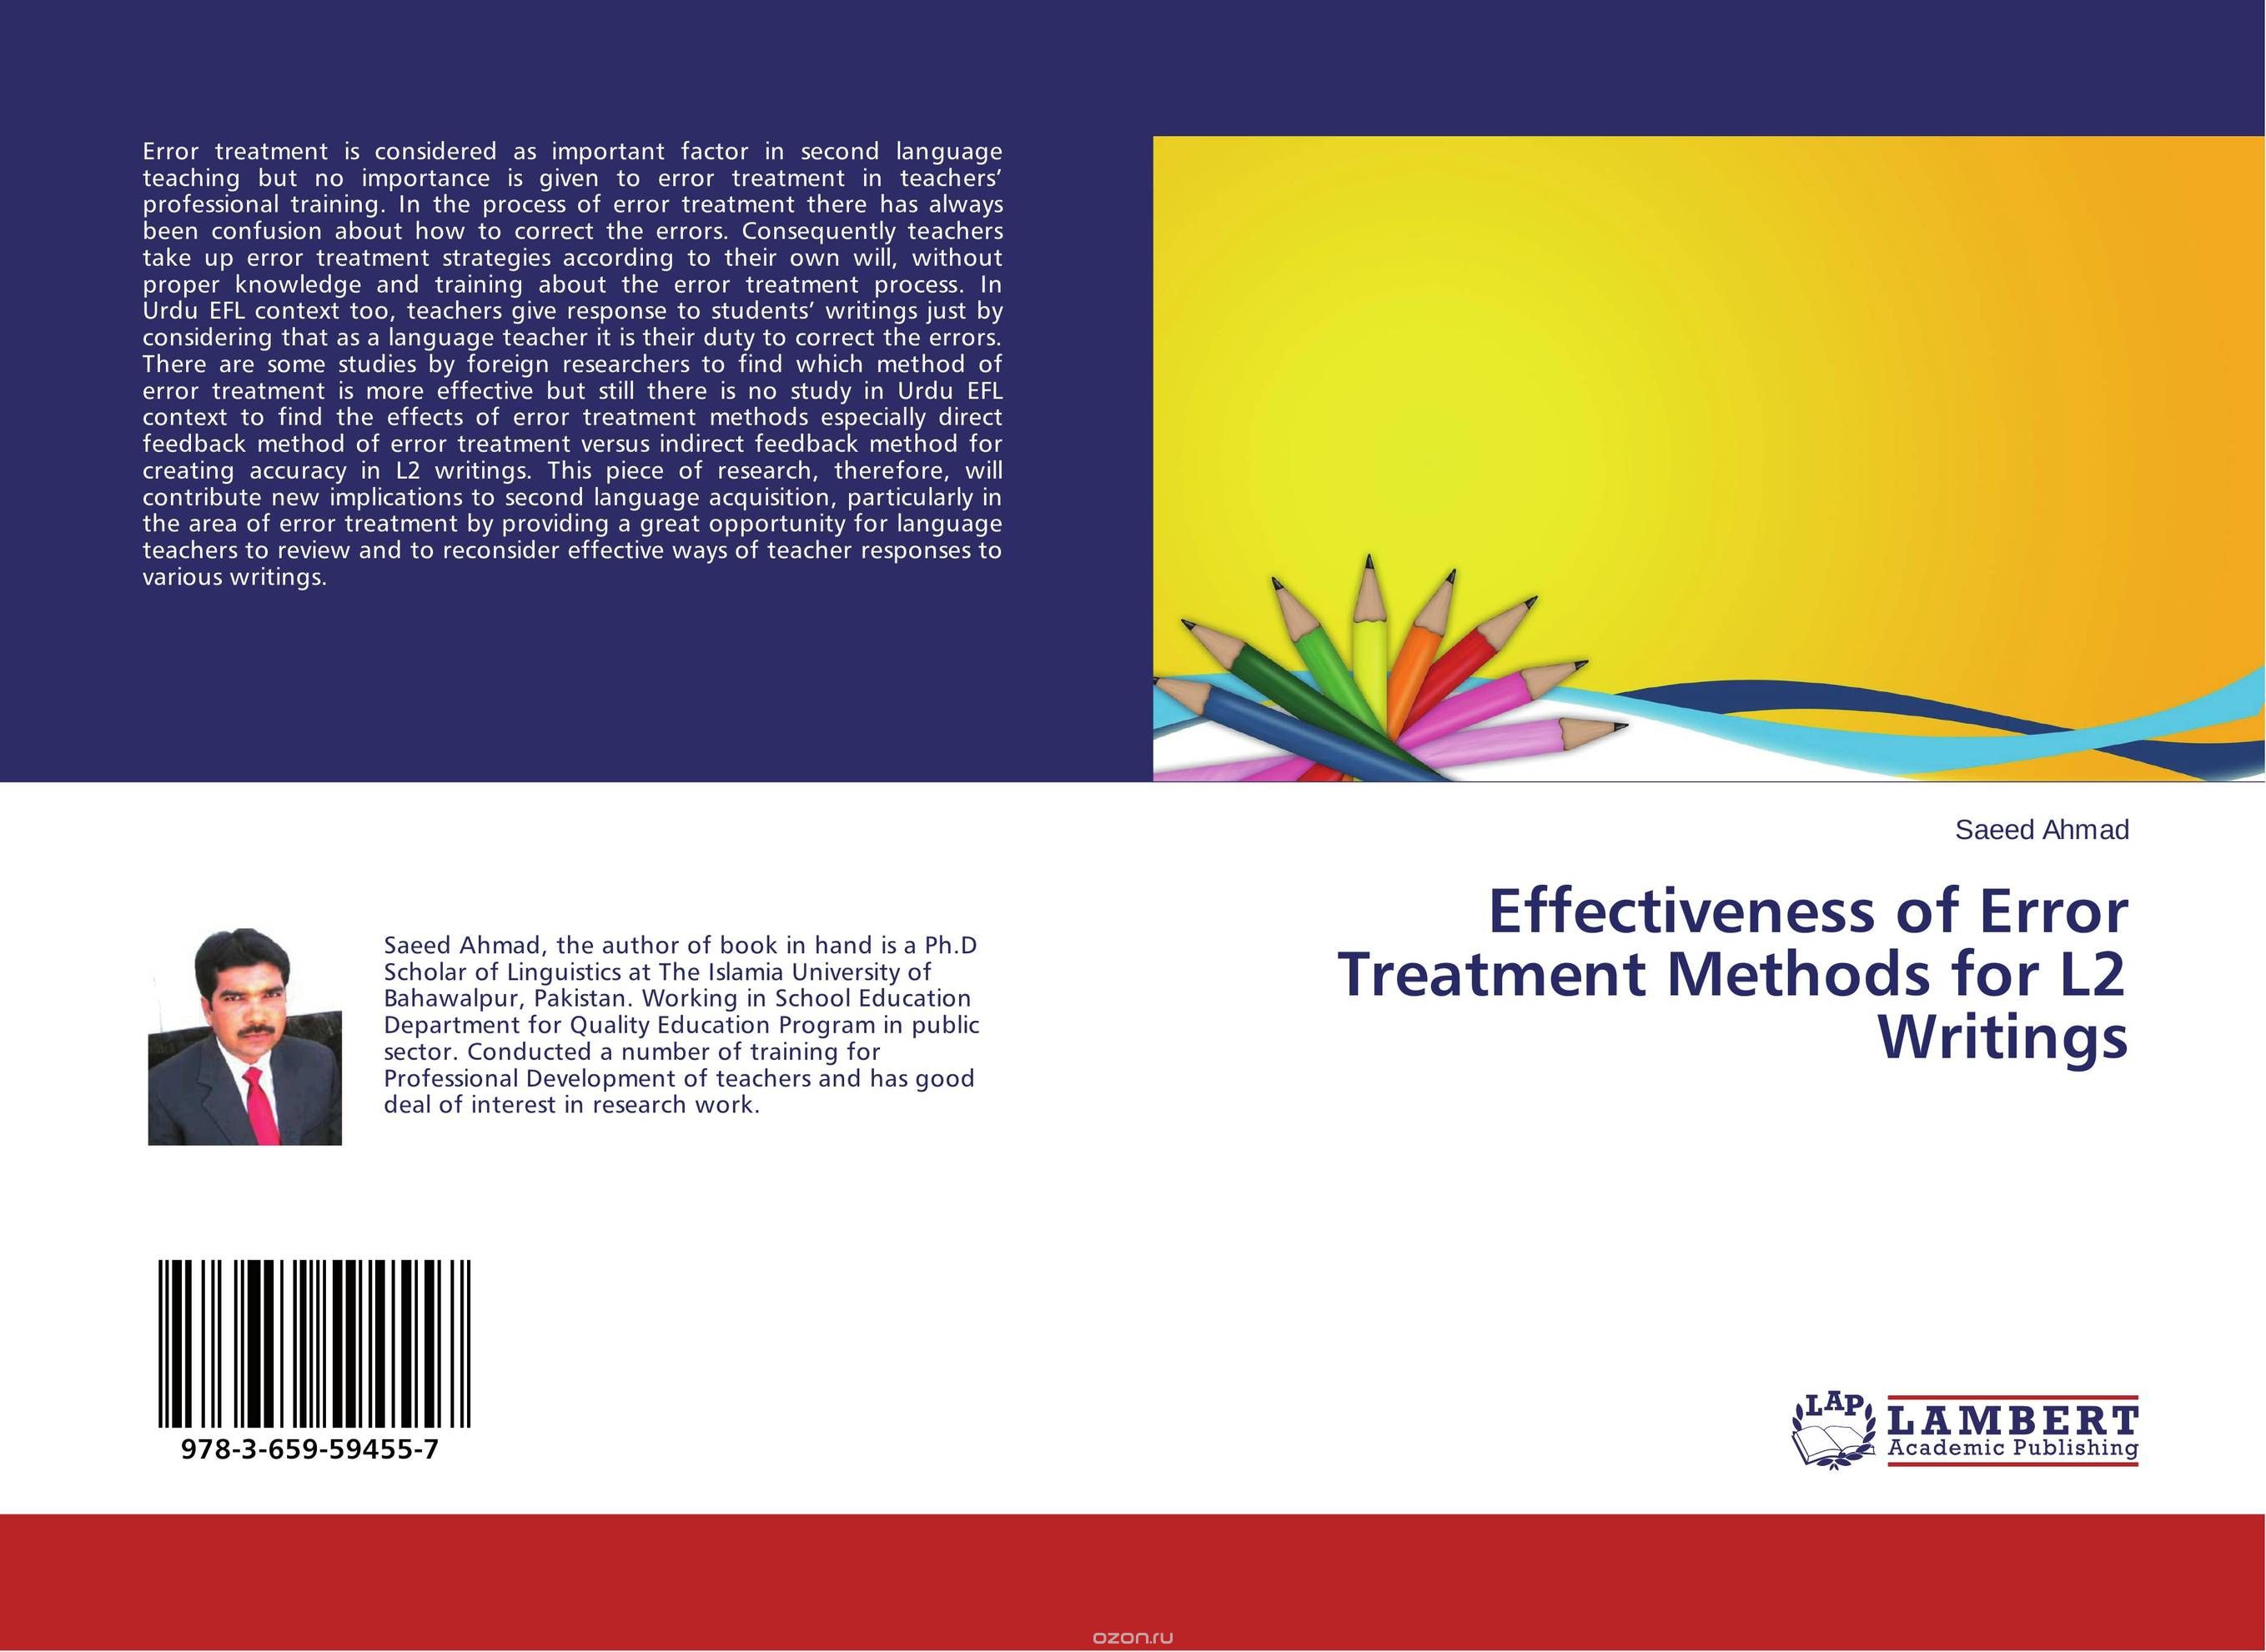 Effectiveness of Error Treatment Methods for L2 Writings